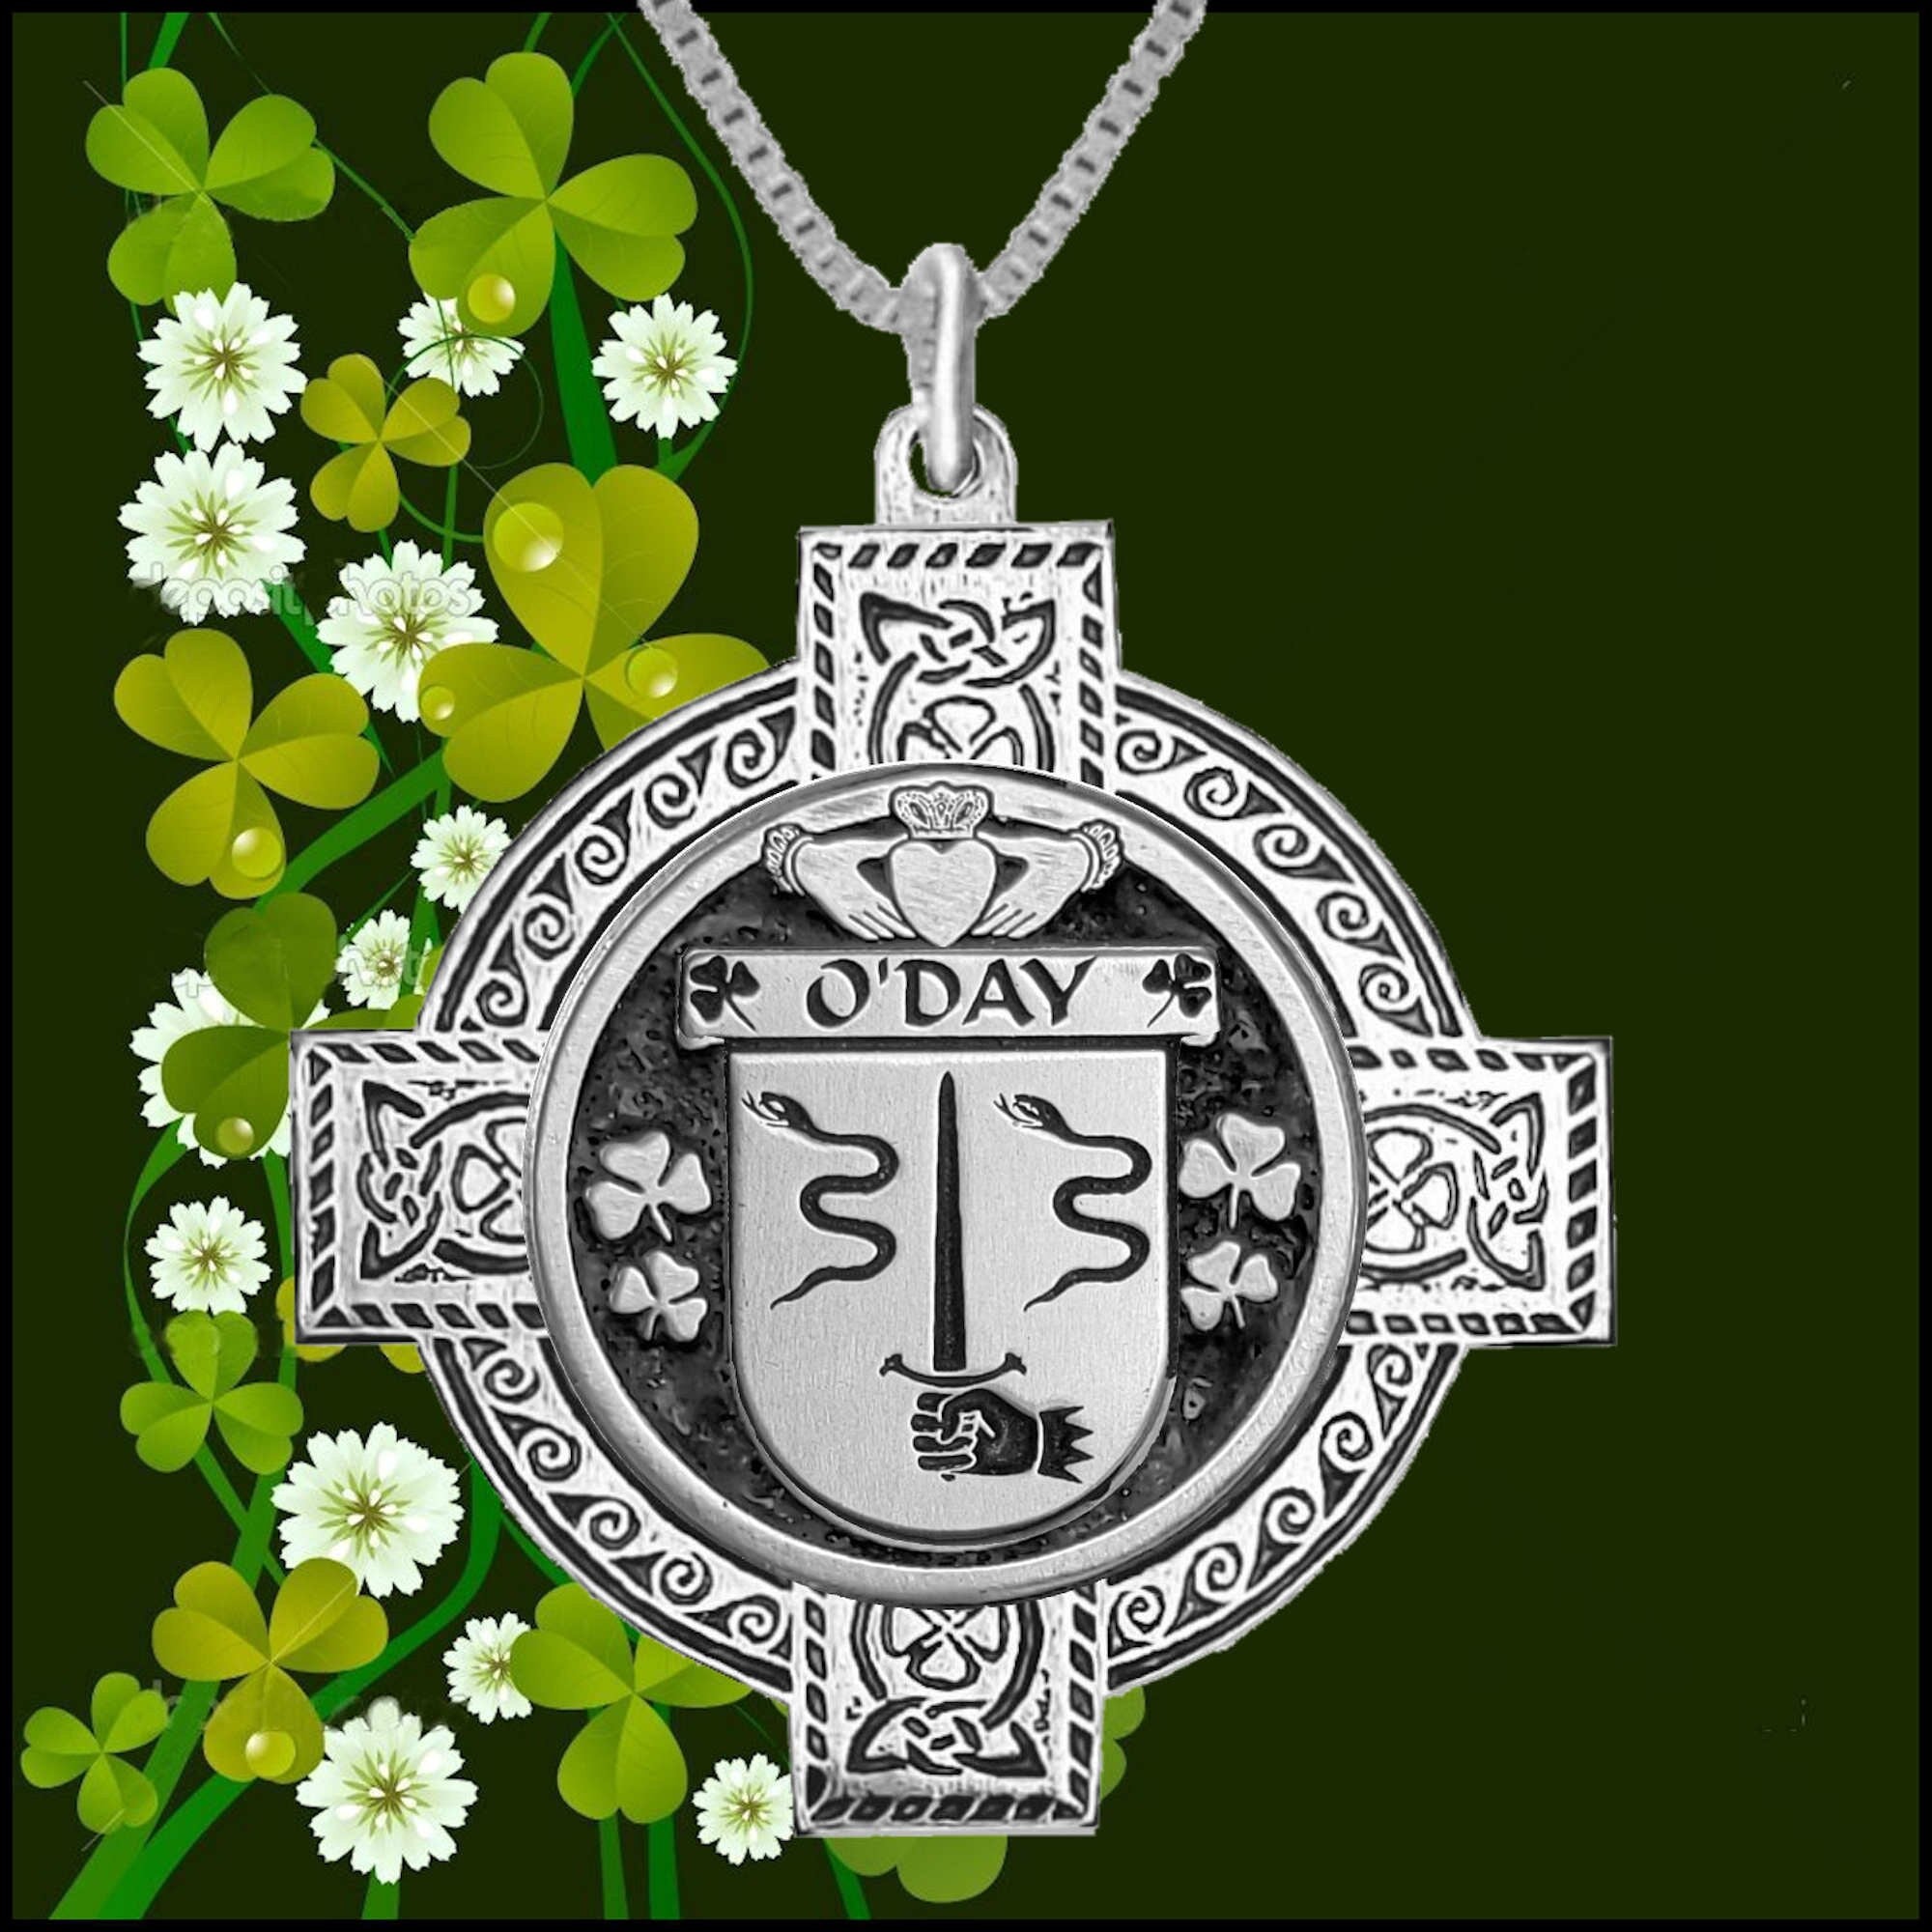 O'Day Irish Coat of Arms Celtic Cross Pendant ~ IP04